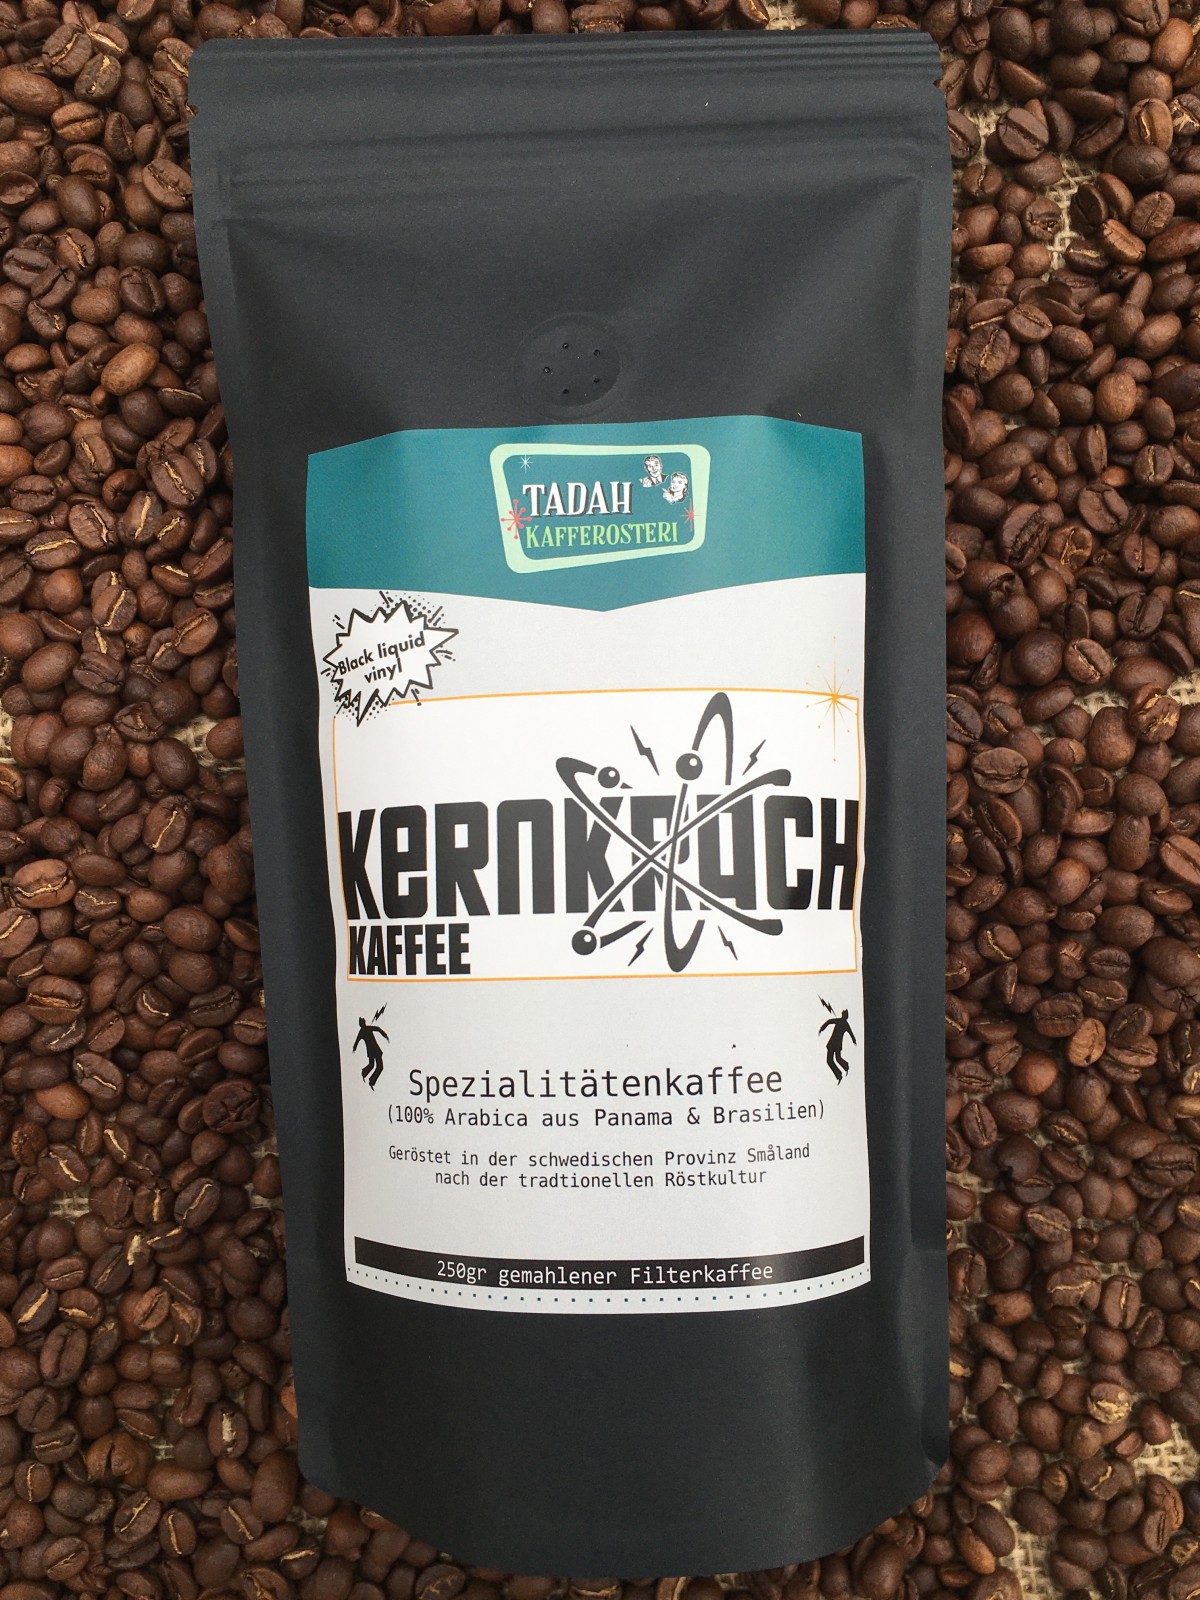 "KERNKRACH" | coffee blend